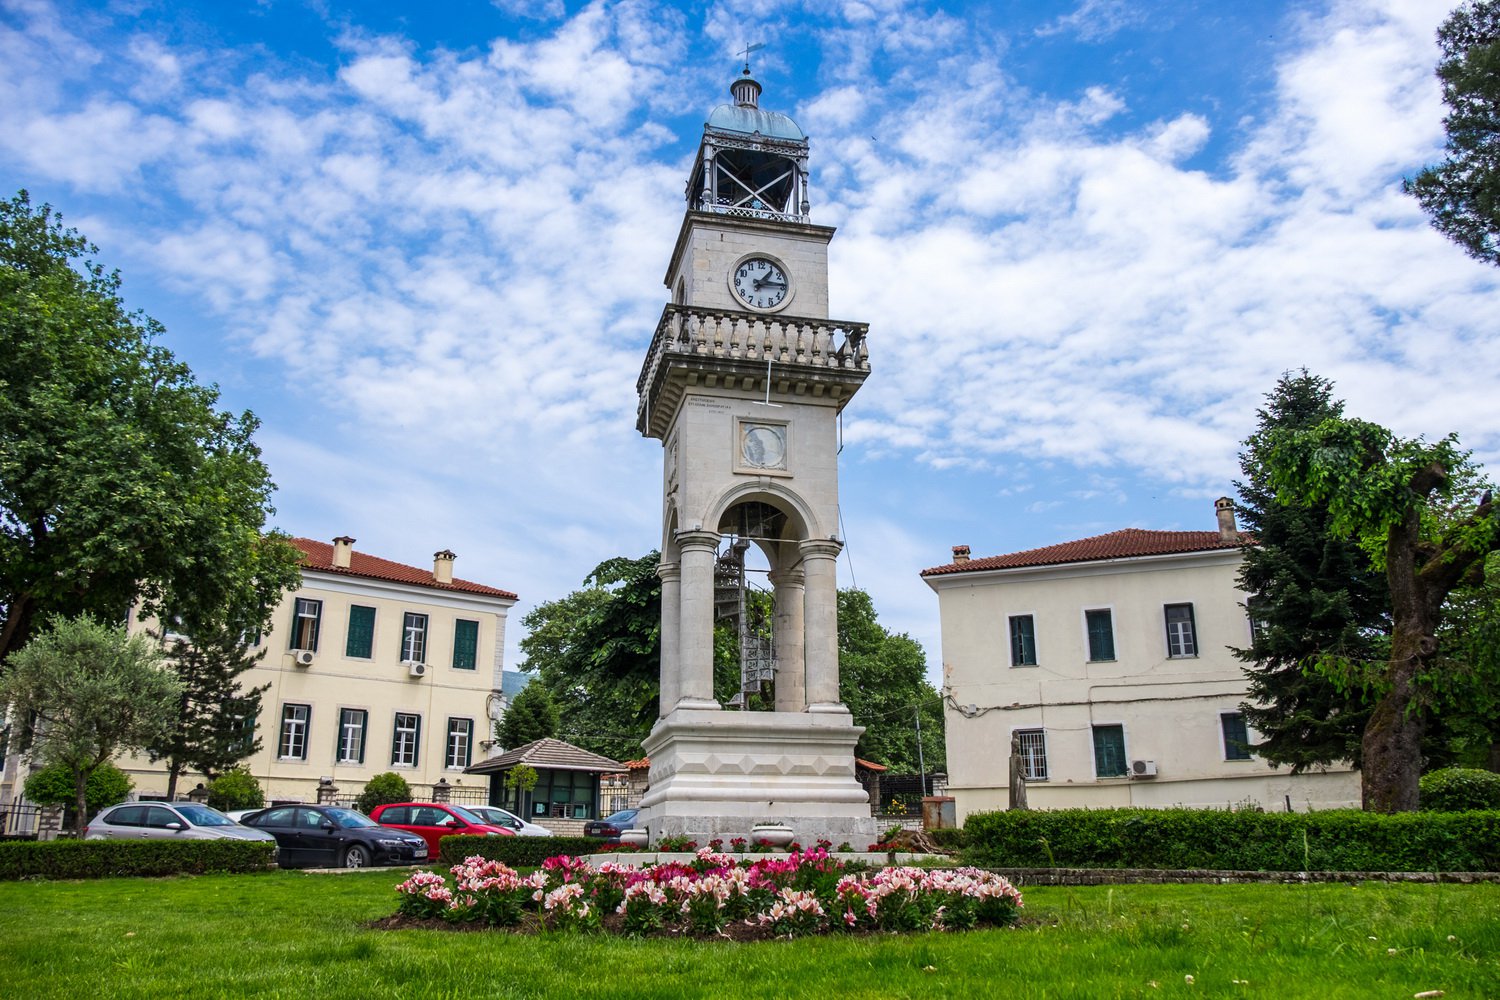 The Clock Tower (Dimokratias square)